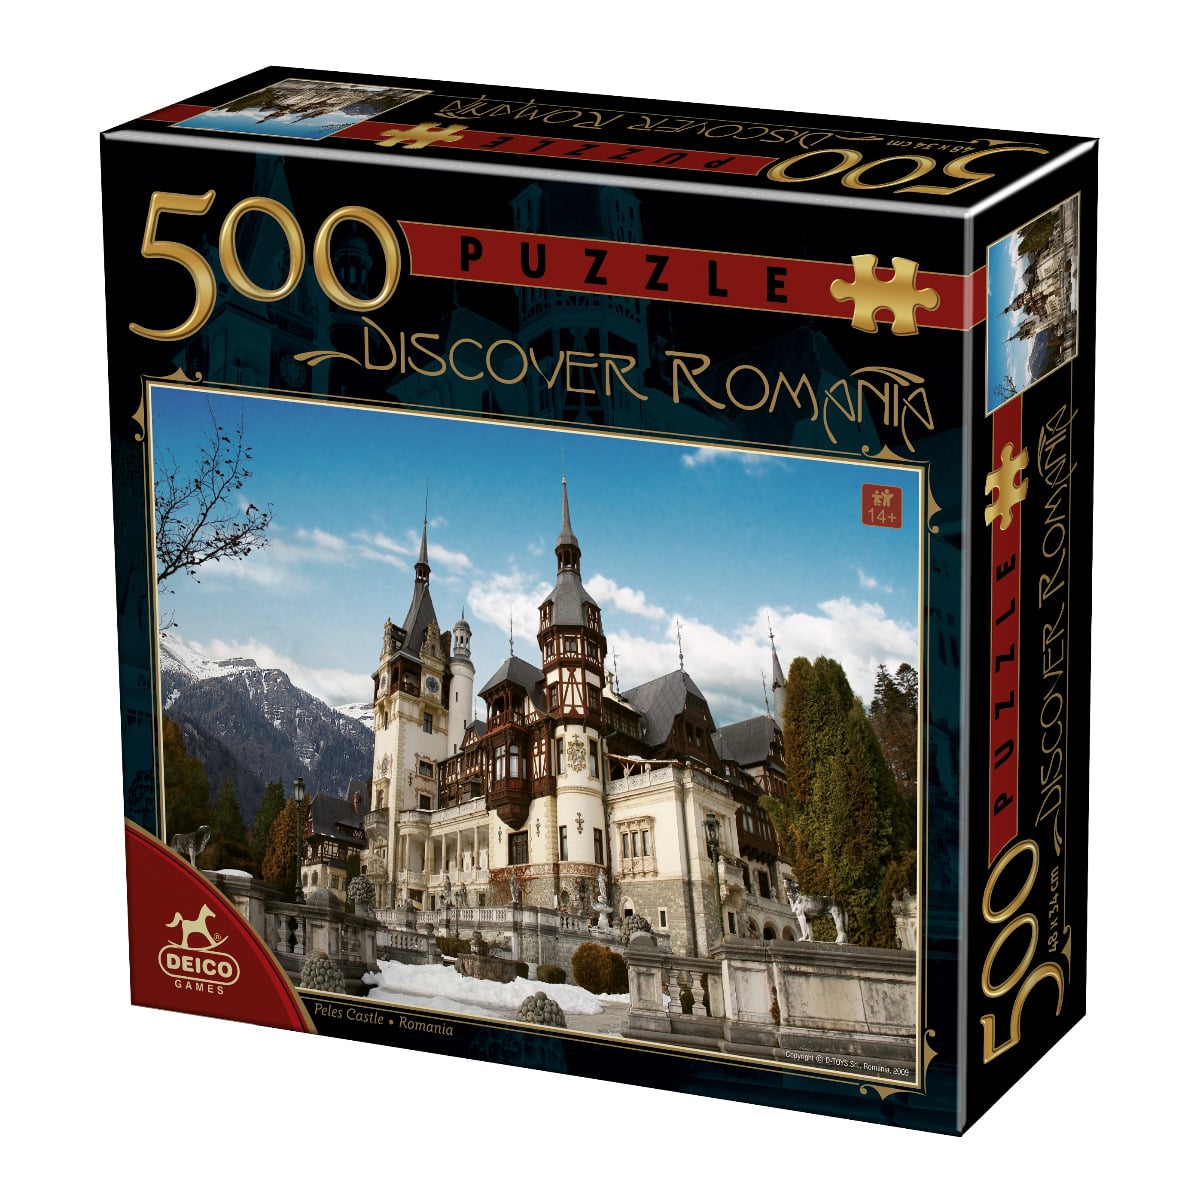 Puzzle - Discover Romania - Castelul Peles iarna - 500 piese | Deico Games